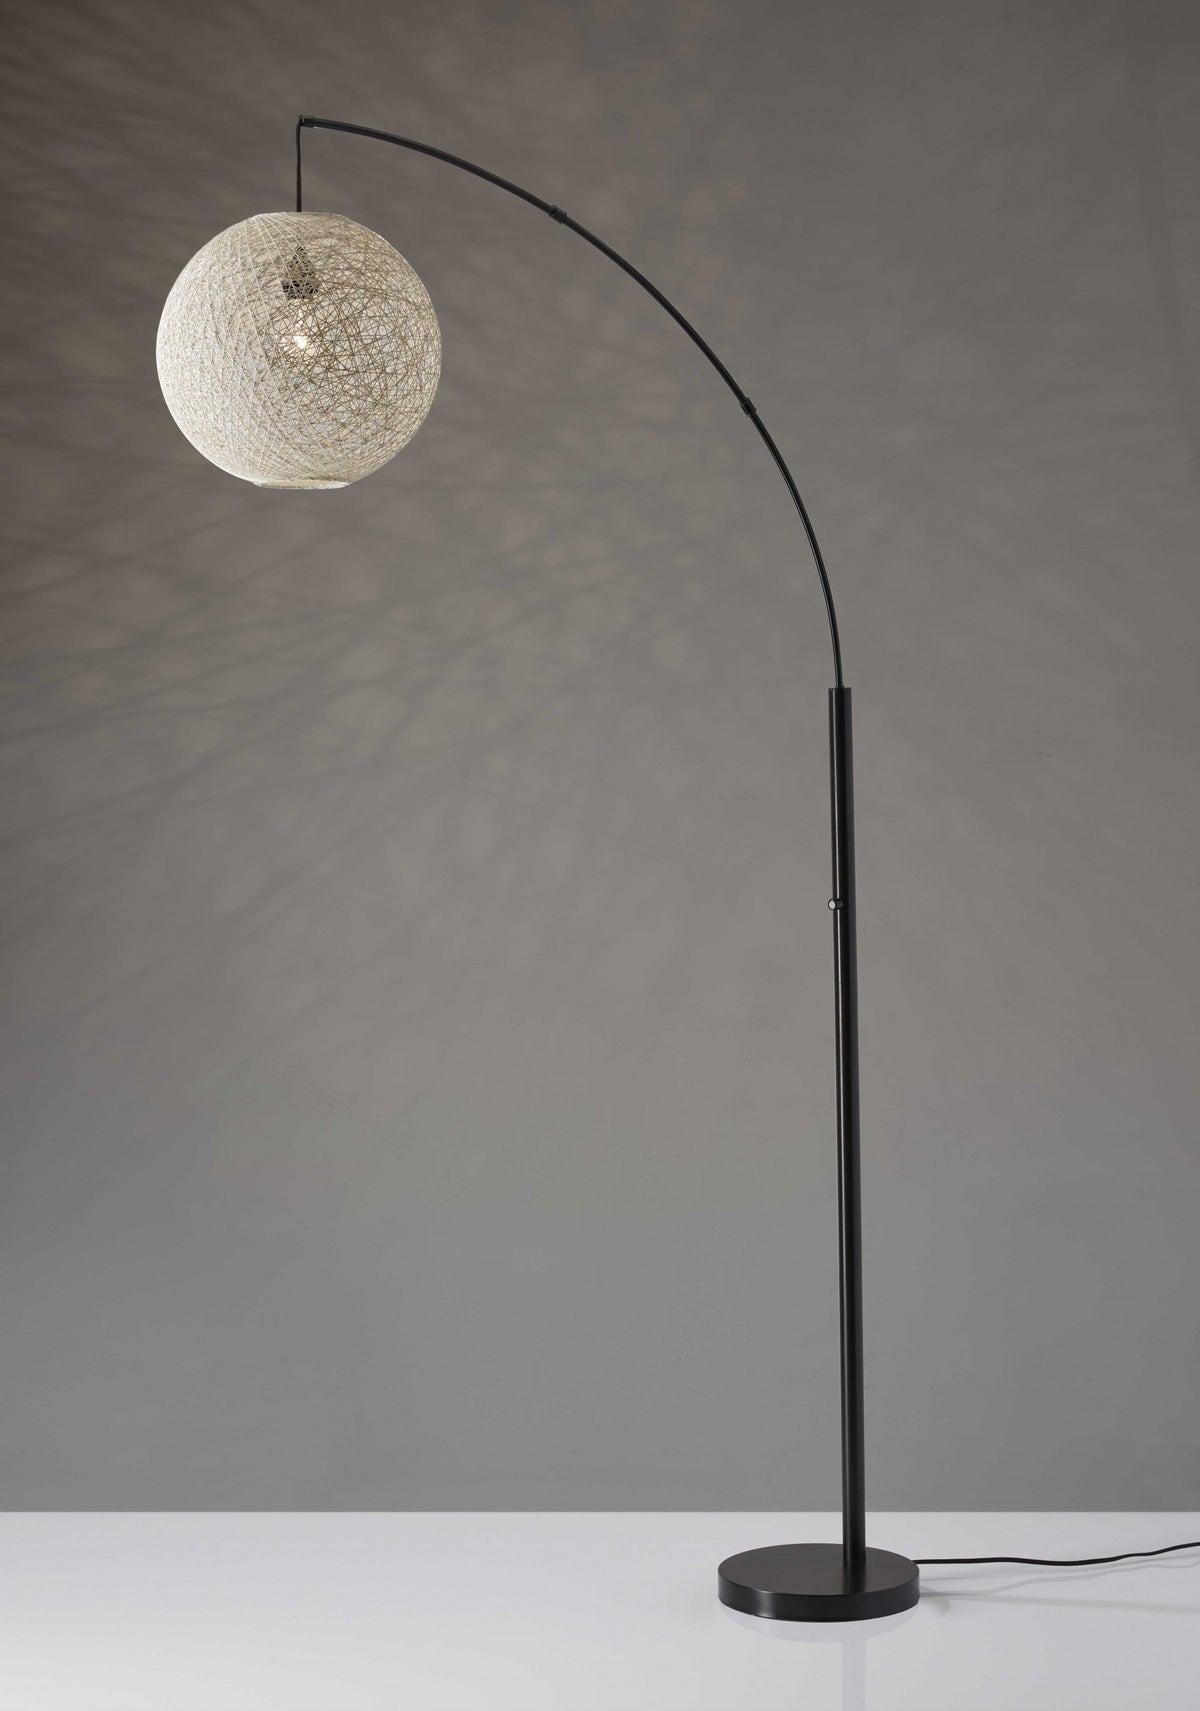 Groovy Rattan String Ball Shade Floor Lamp